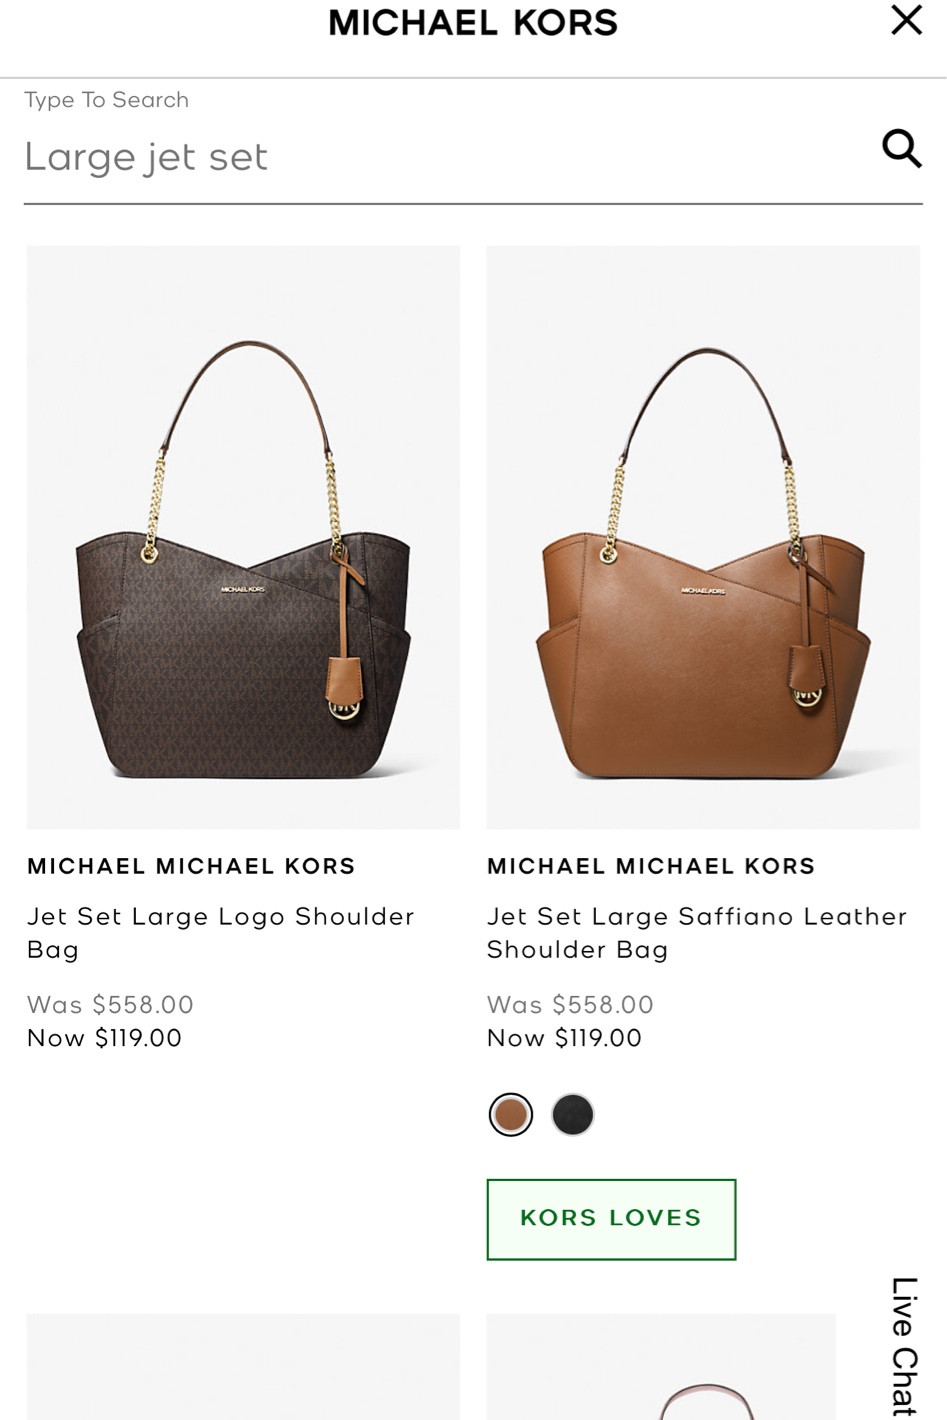 Nearly half of Nordstrom stores drop Michael Kors handbags - New